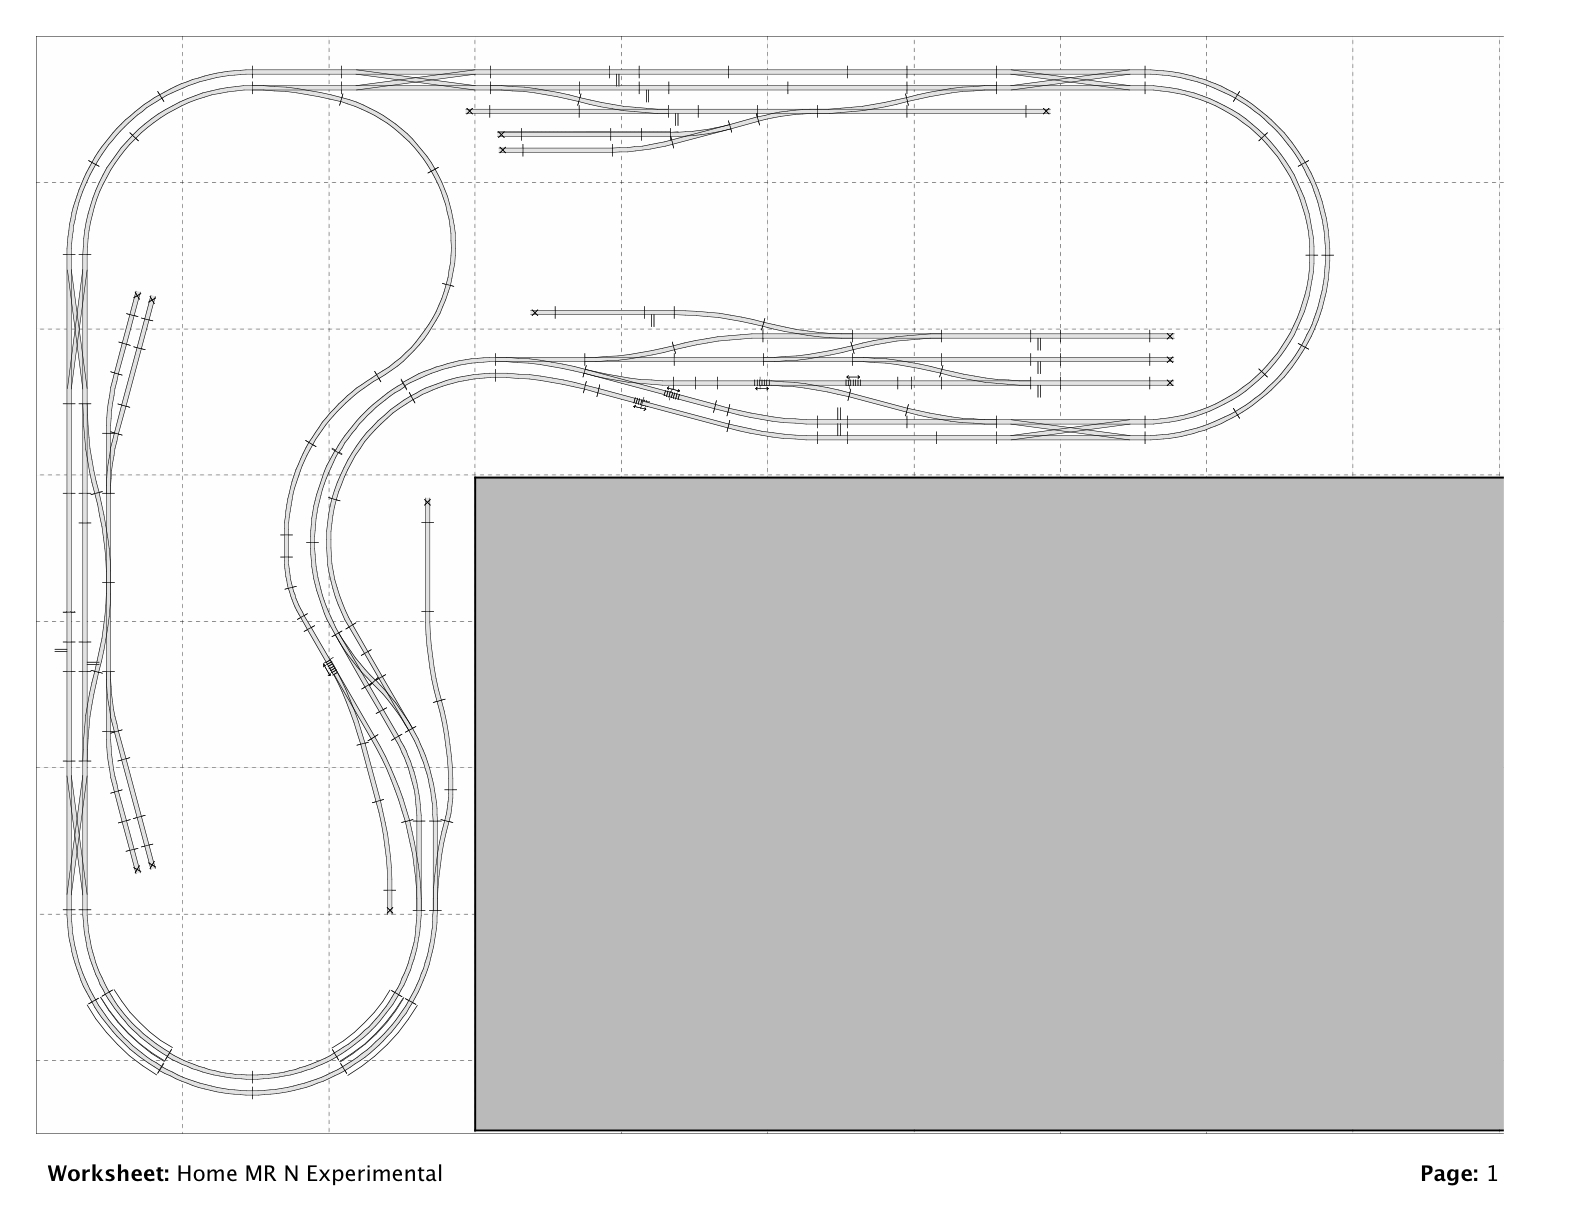 train-toy-ho-model-train-layouts-plans-design-layout-plans-pdf-download-for-sale